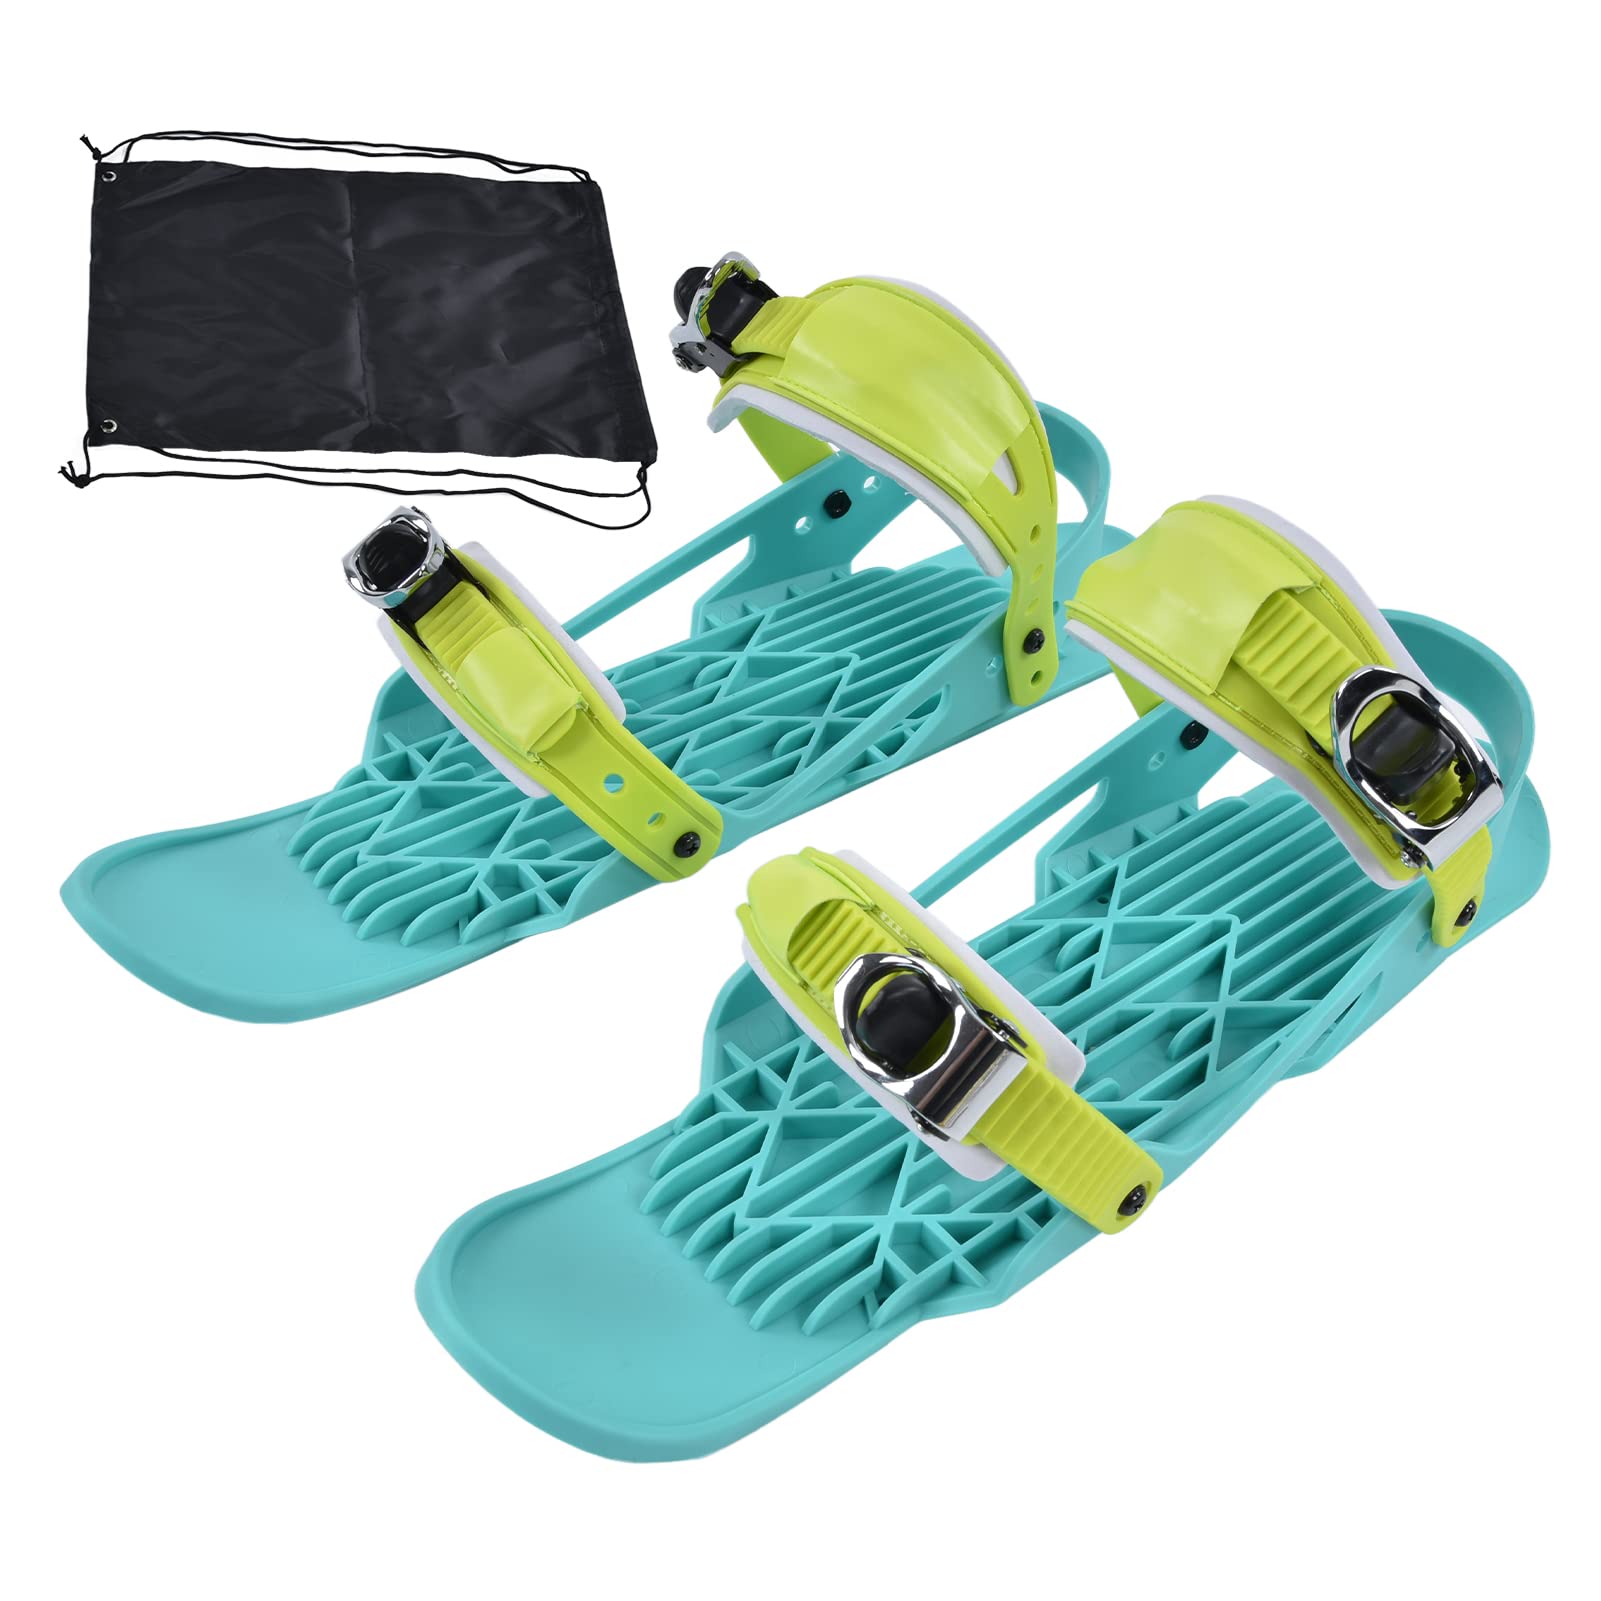 Mini Short Ski SkatesAdjustable Short Mini Ski SkatesSkiboards Outdoor Ski Shoes for Winter Sport Skiing EquipmentShortest